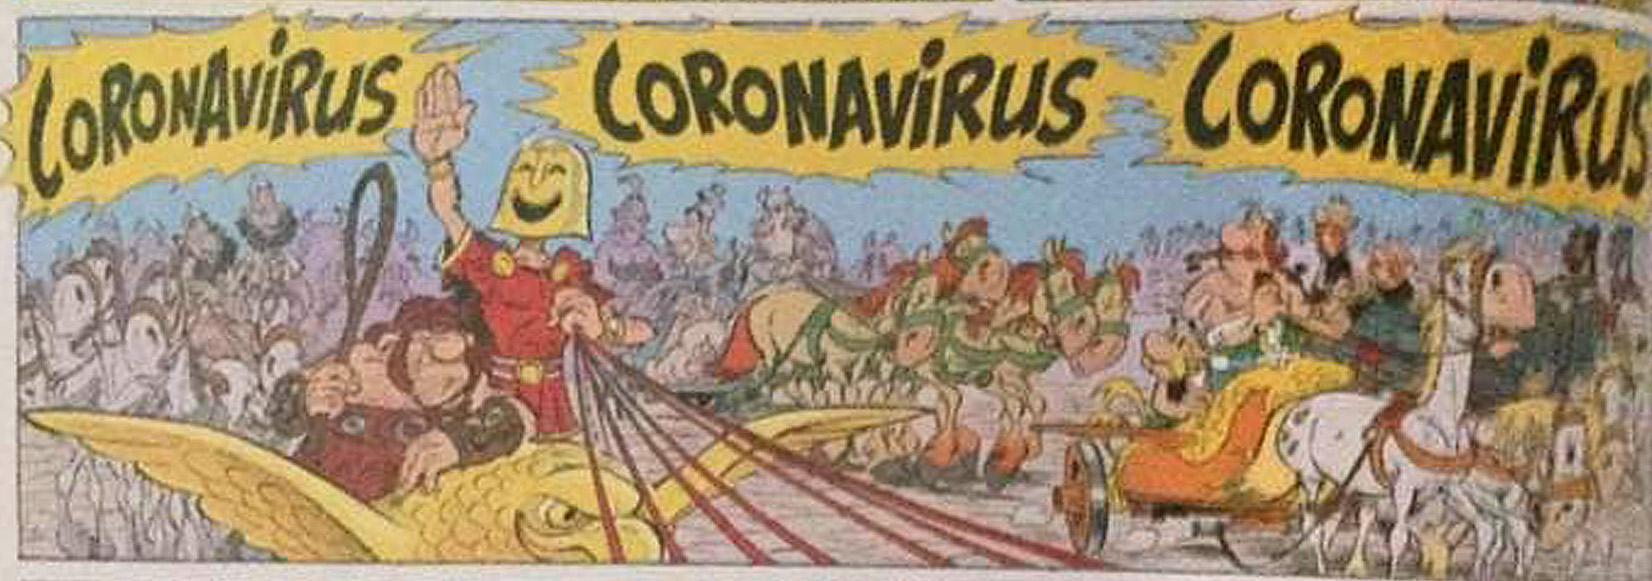 Asterix Coronavirus 1981